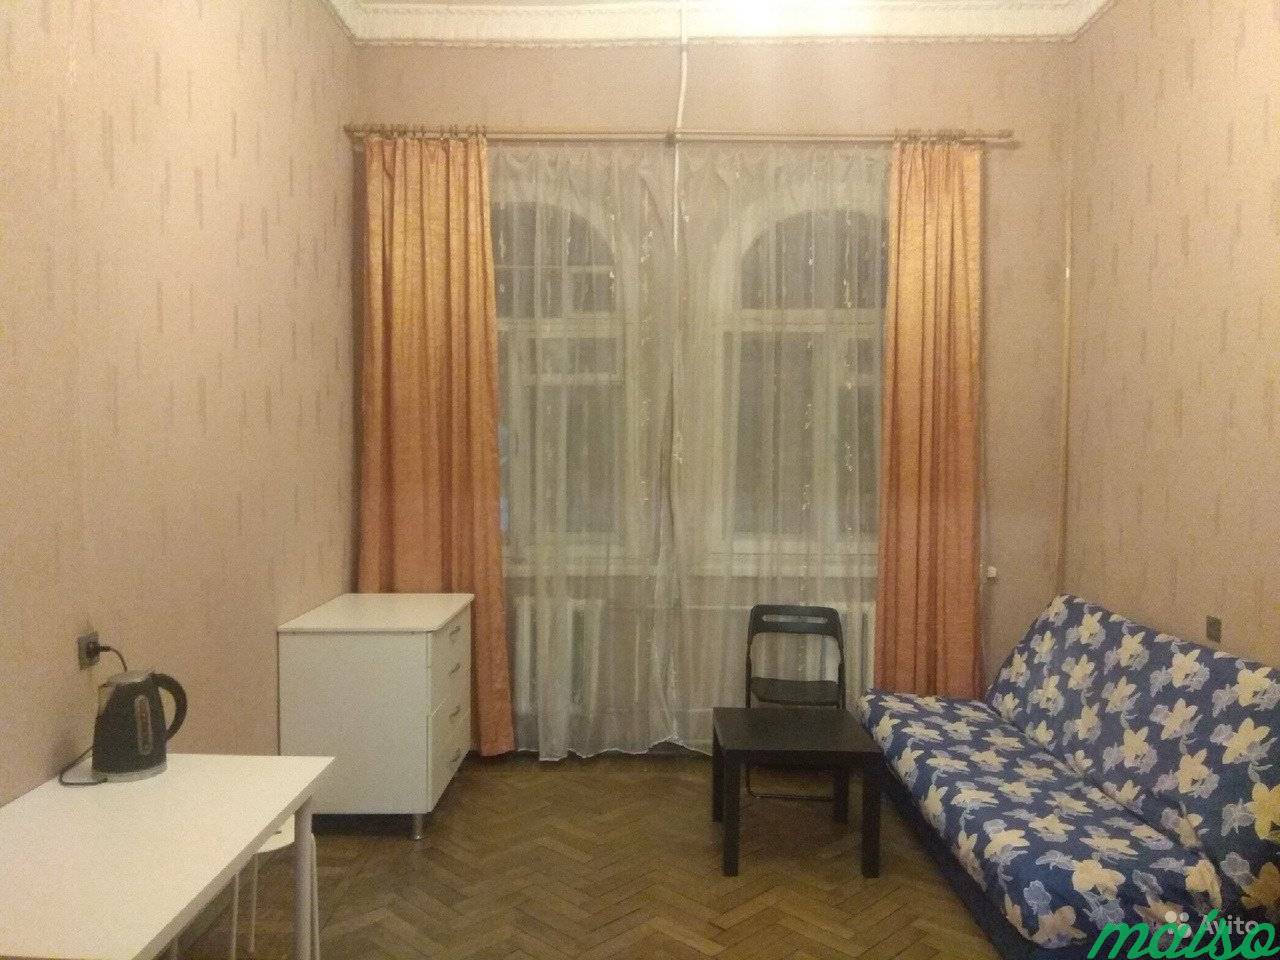 Комната 16.5 м² в >, 9-к, 2/6 эт. в Санкт-Петербурге. Фото 1